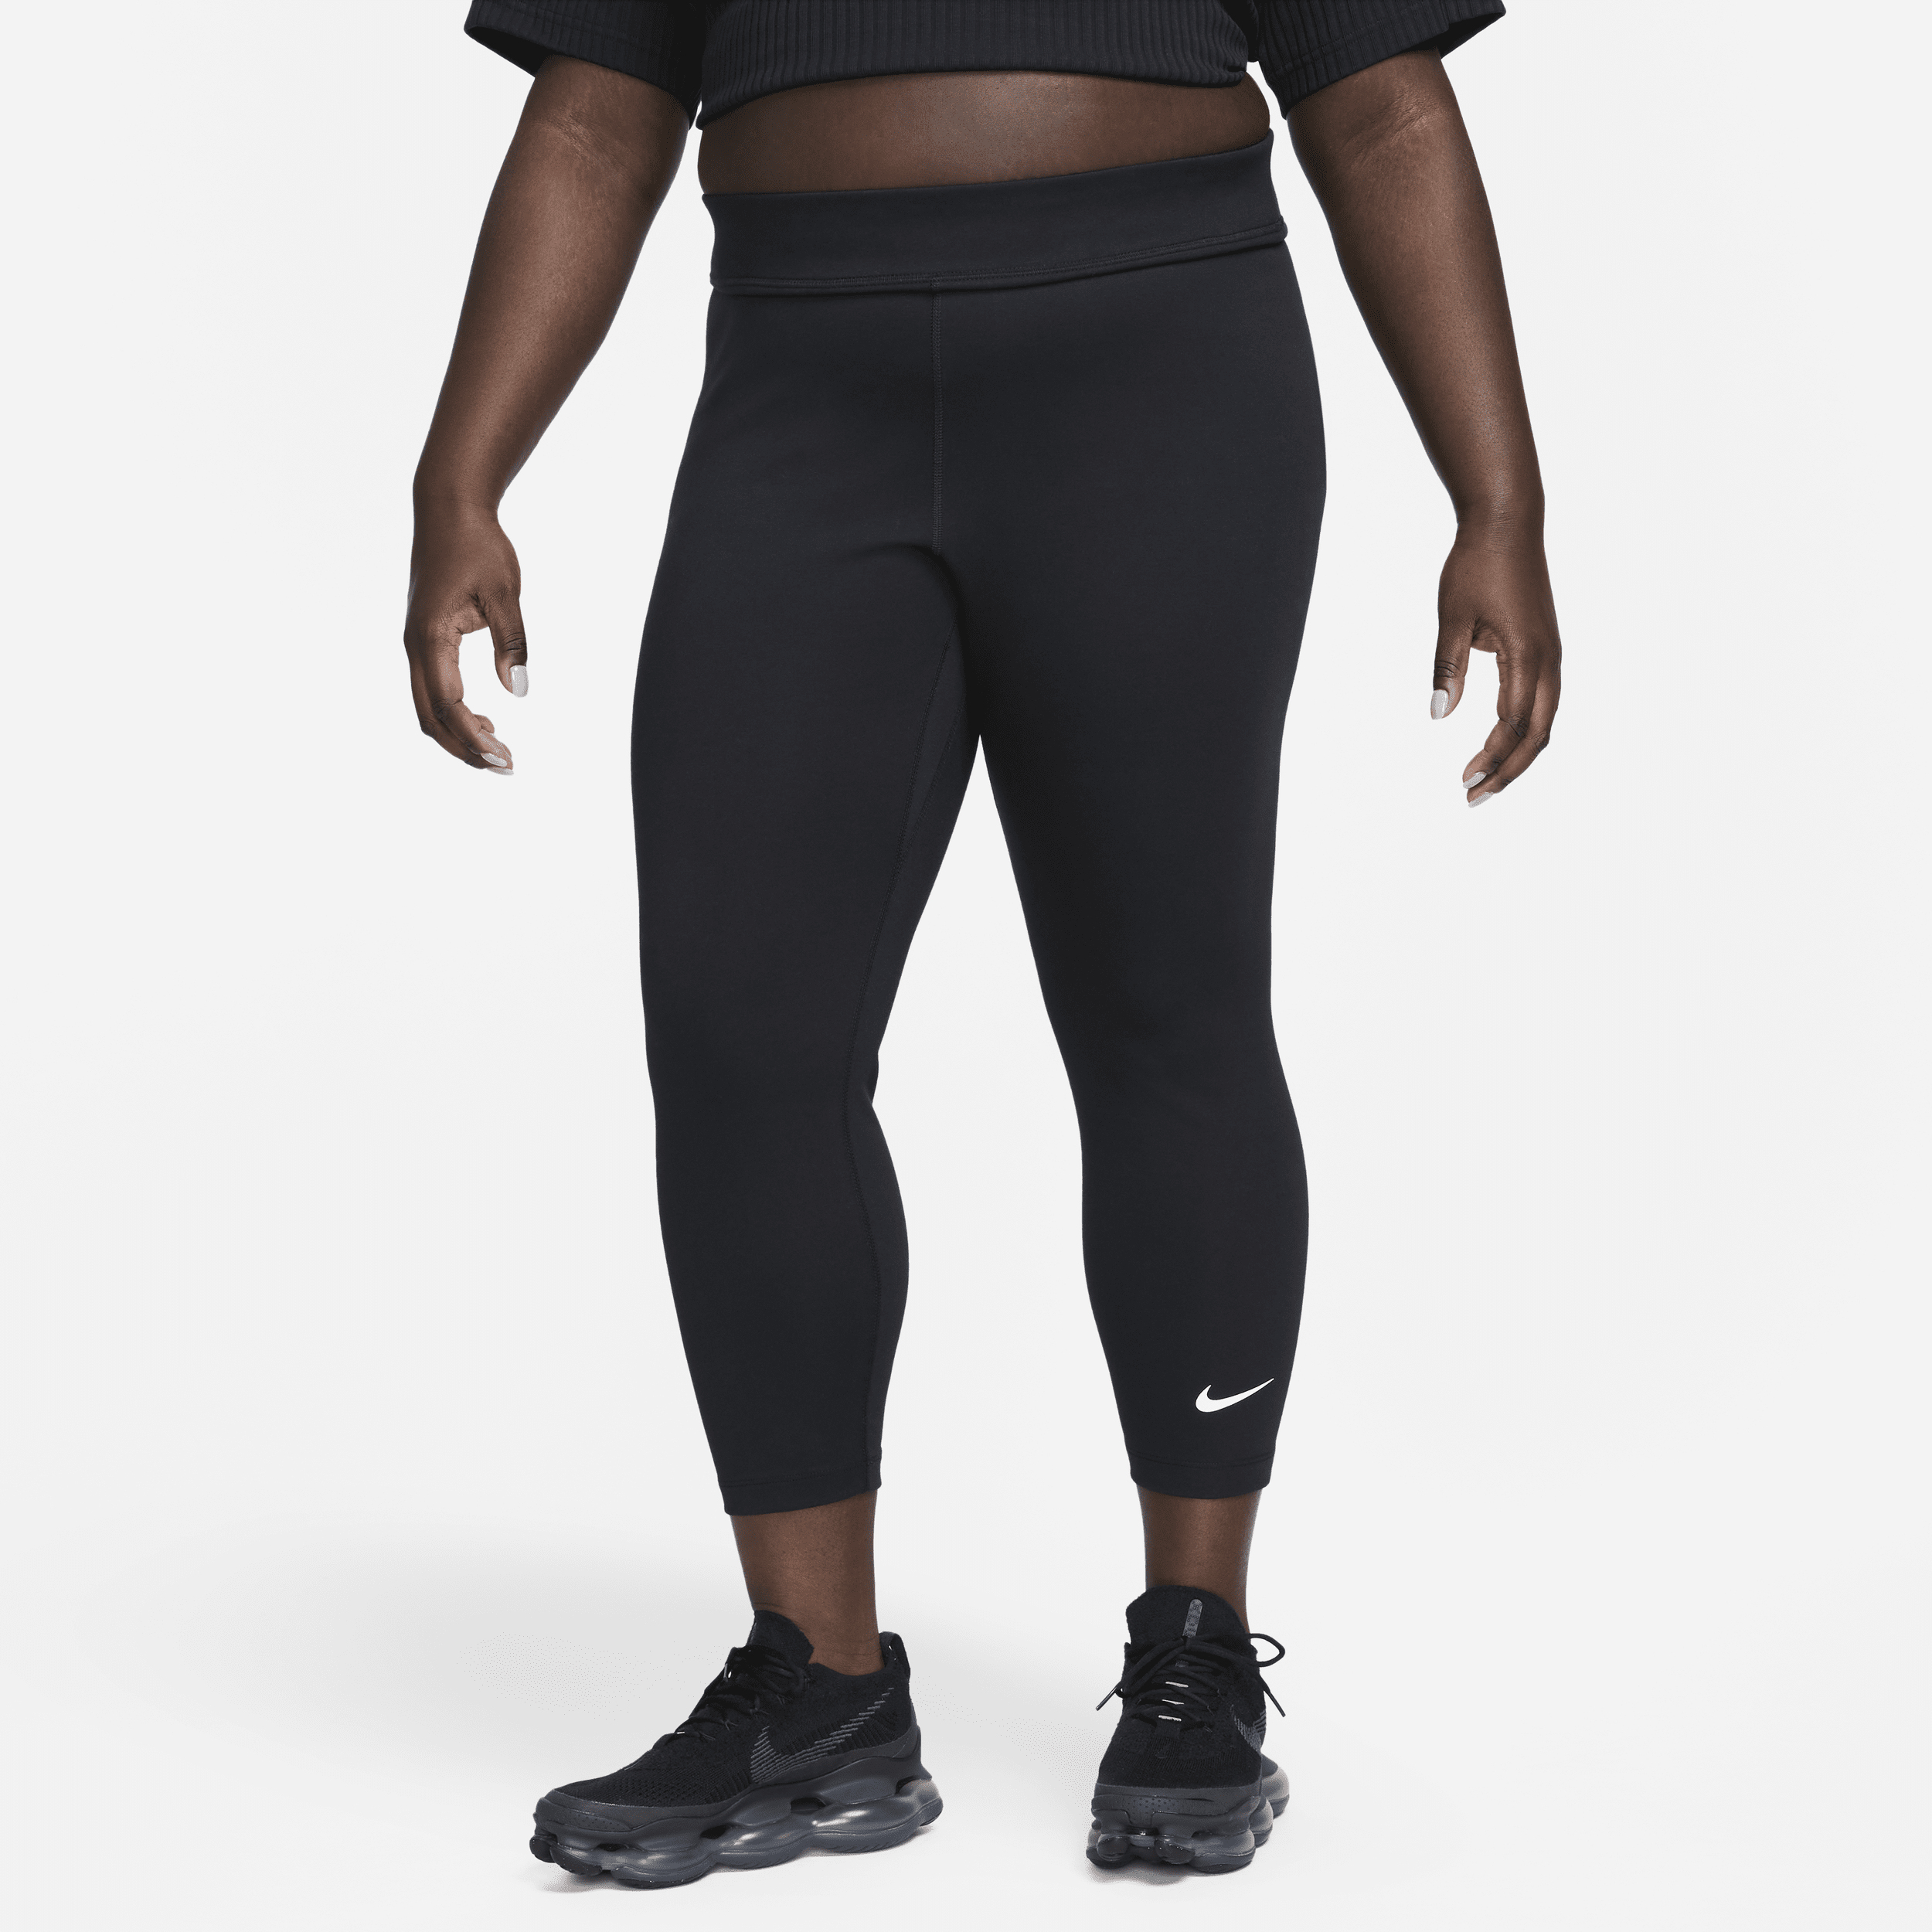 Leggings a 7/8 a vita alta Nike Sportswear Classic – Donna - Nero